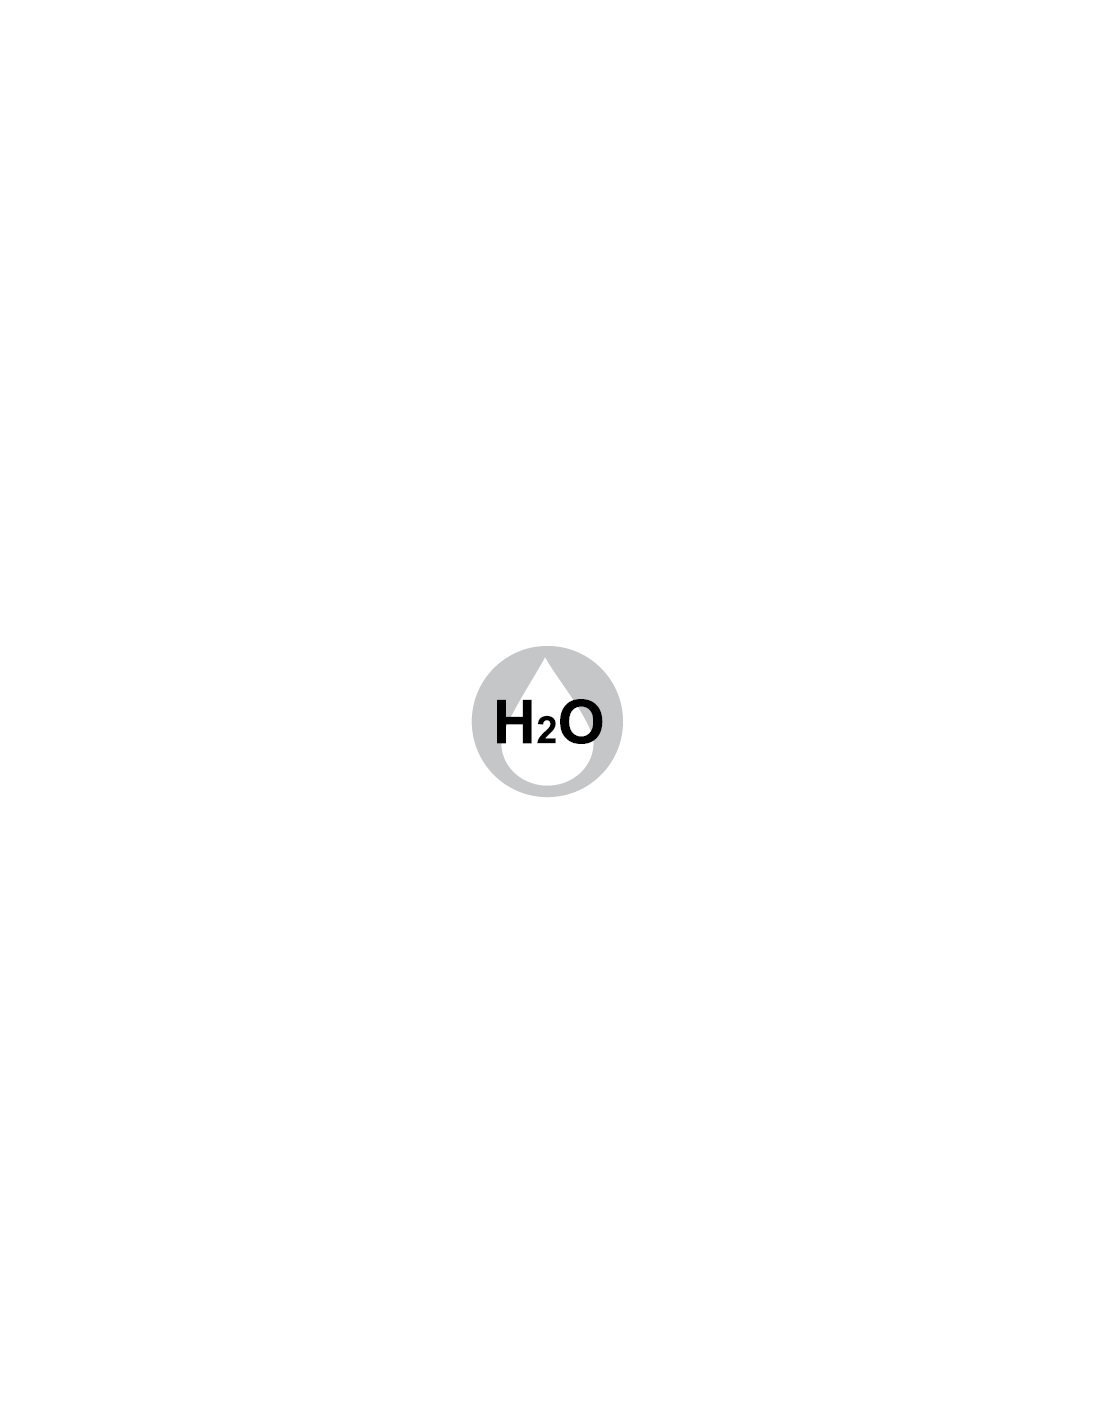 Condensation H2O - Model Marilyn-Snelle-Diva-Saloon-Karina-Brio